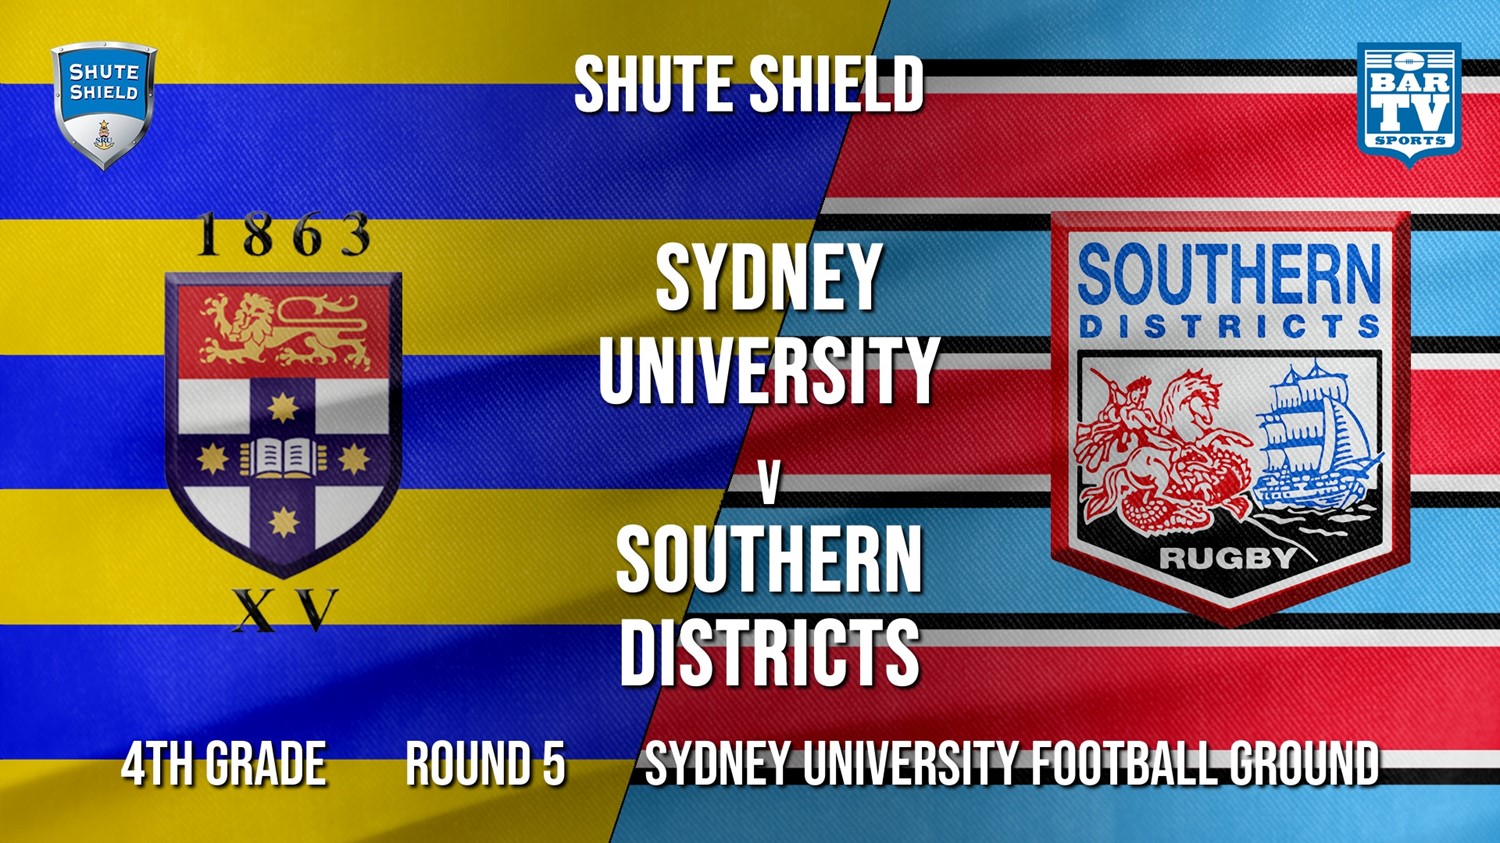 Shute Shield Round 5 - 4th Grade - Sydney University v Southern Districts Minigame Slate Image